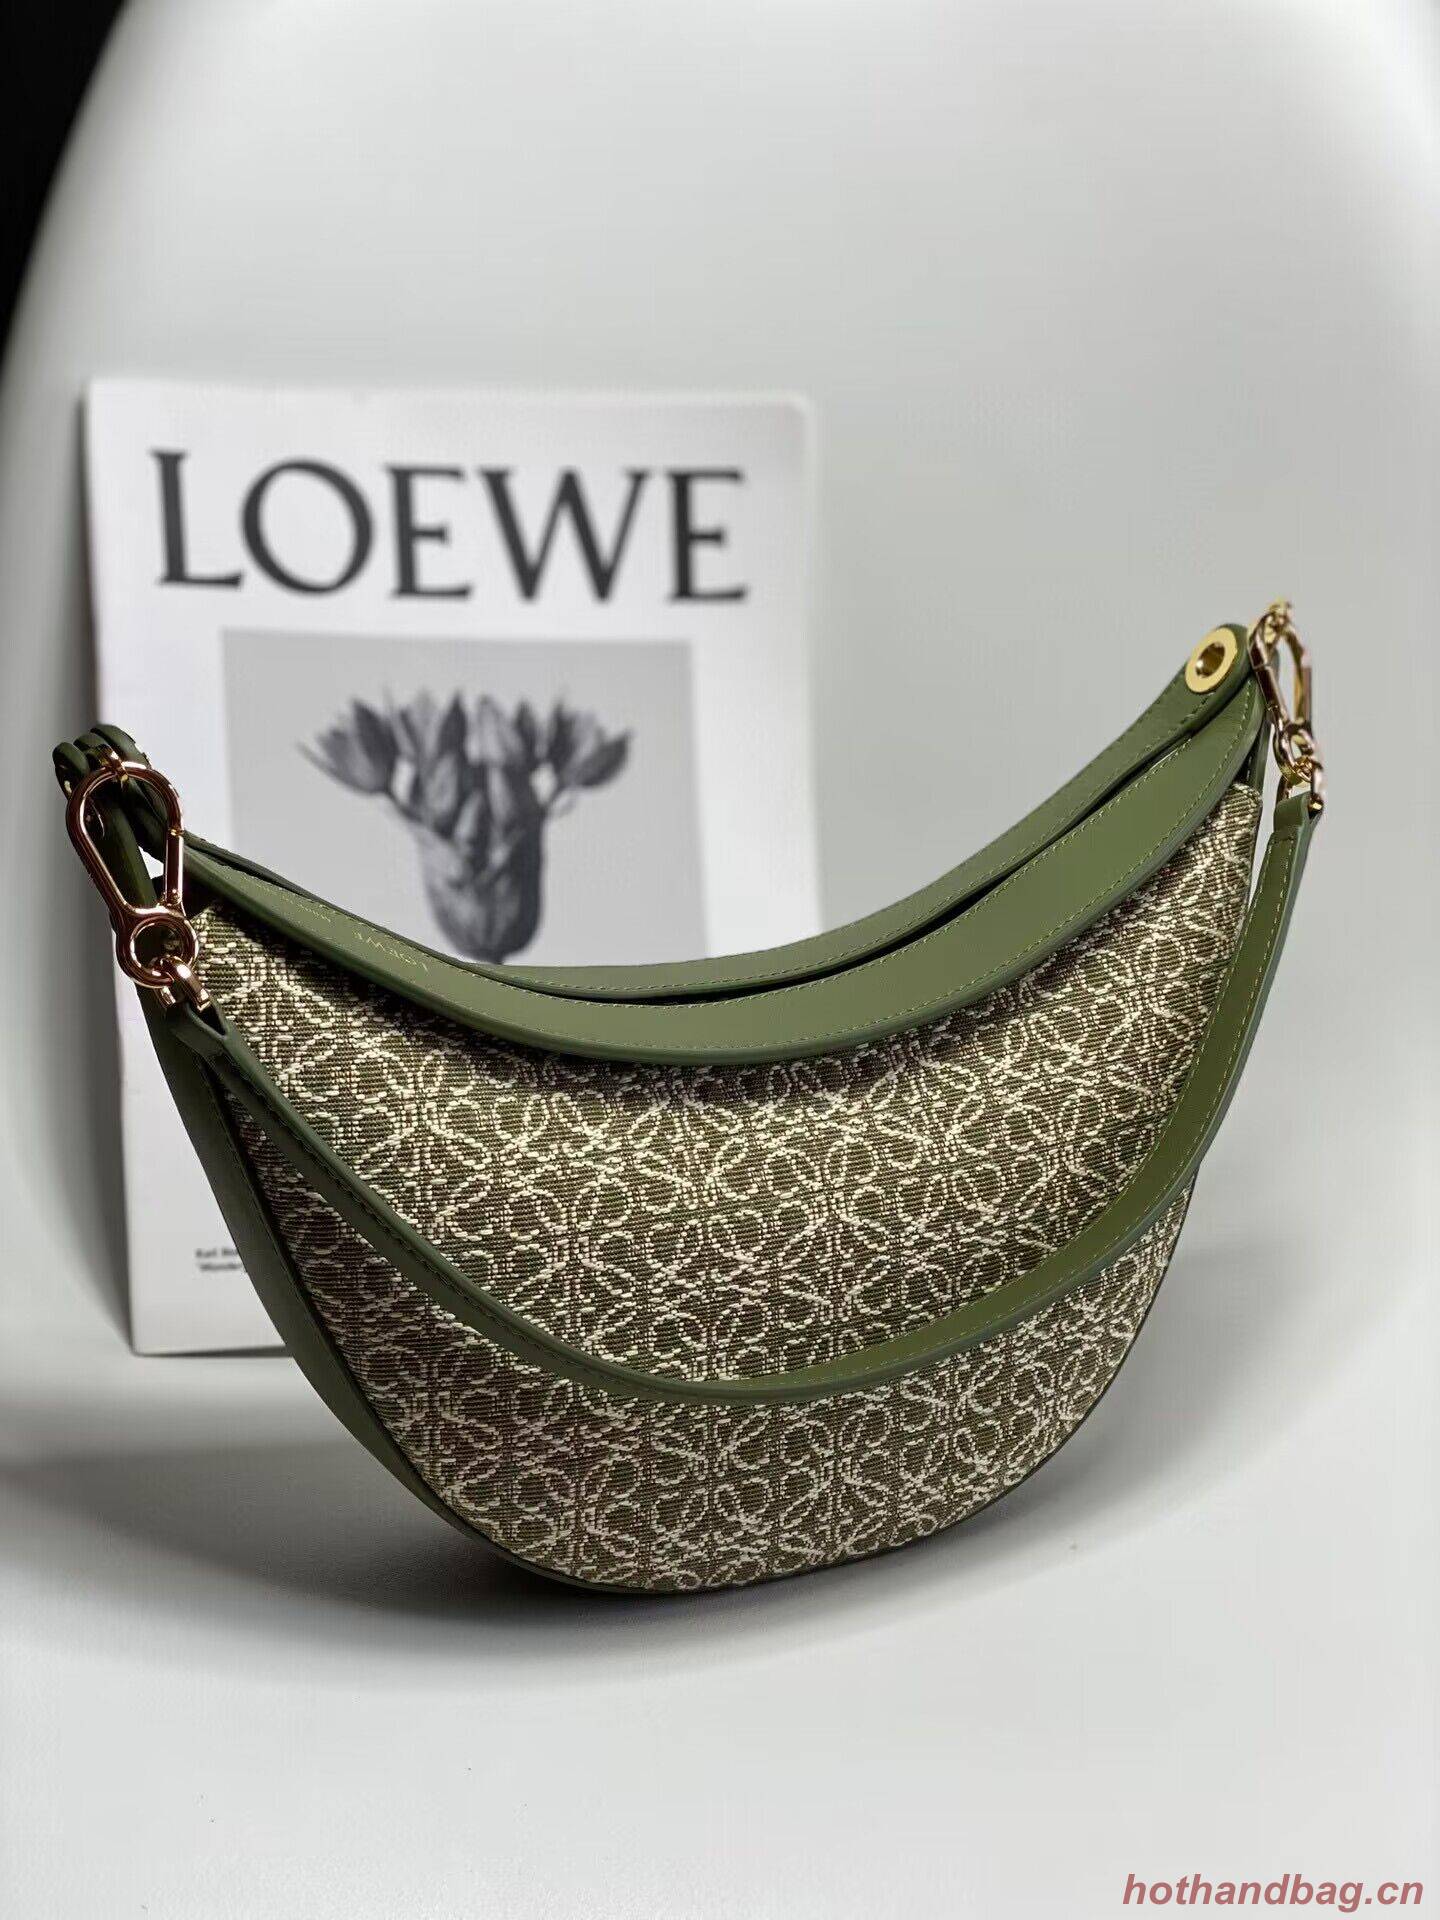 Loewe Original Leather Shoulder Handbag 3073 Green Embroidery